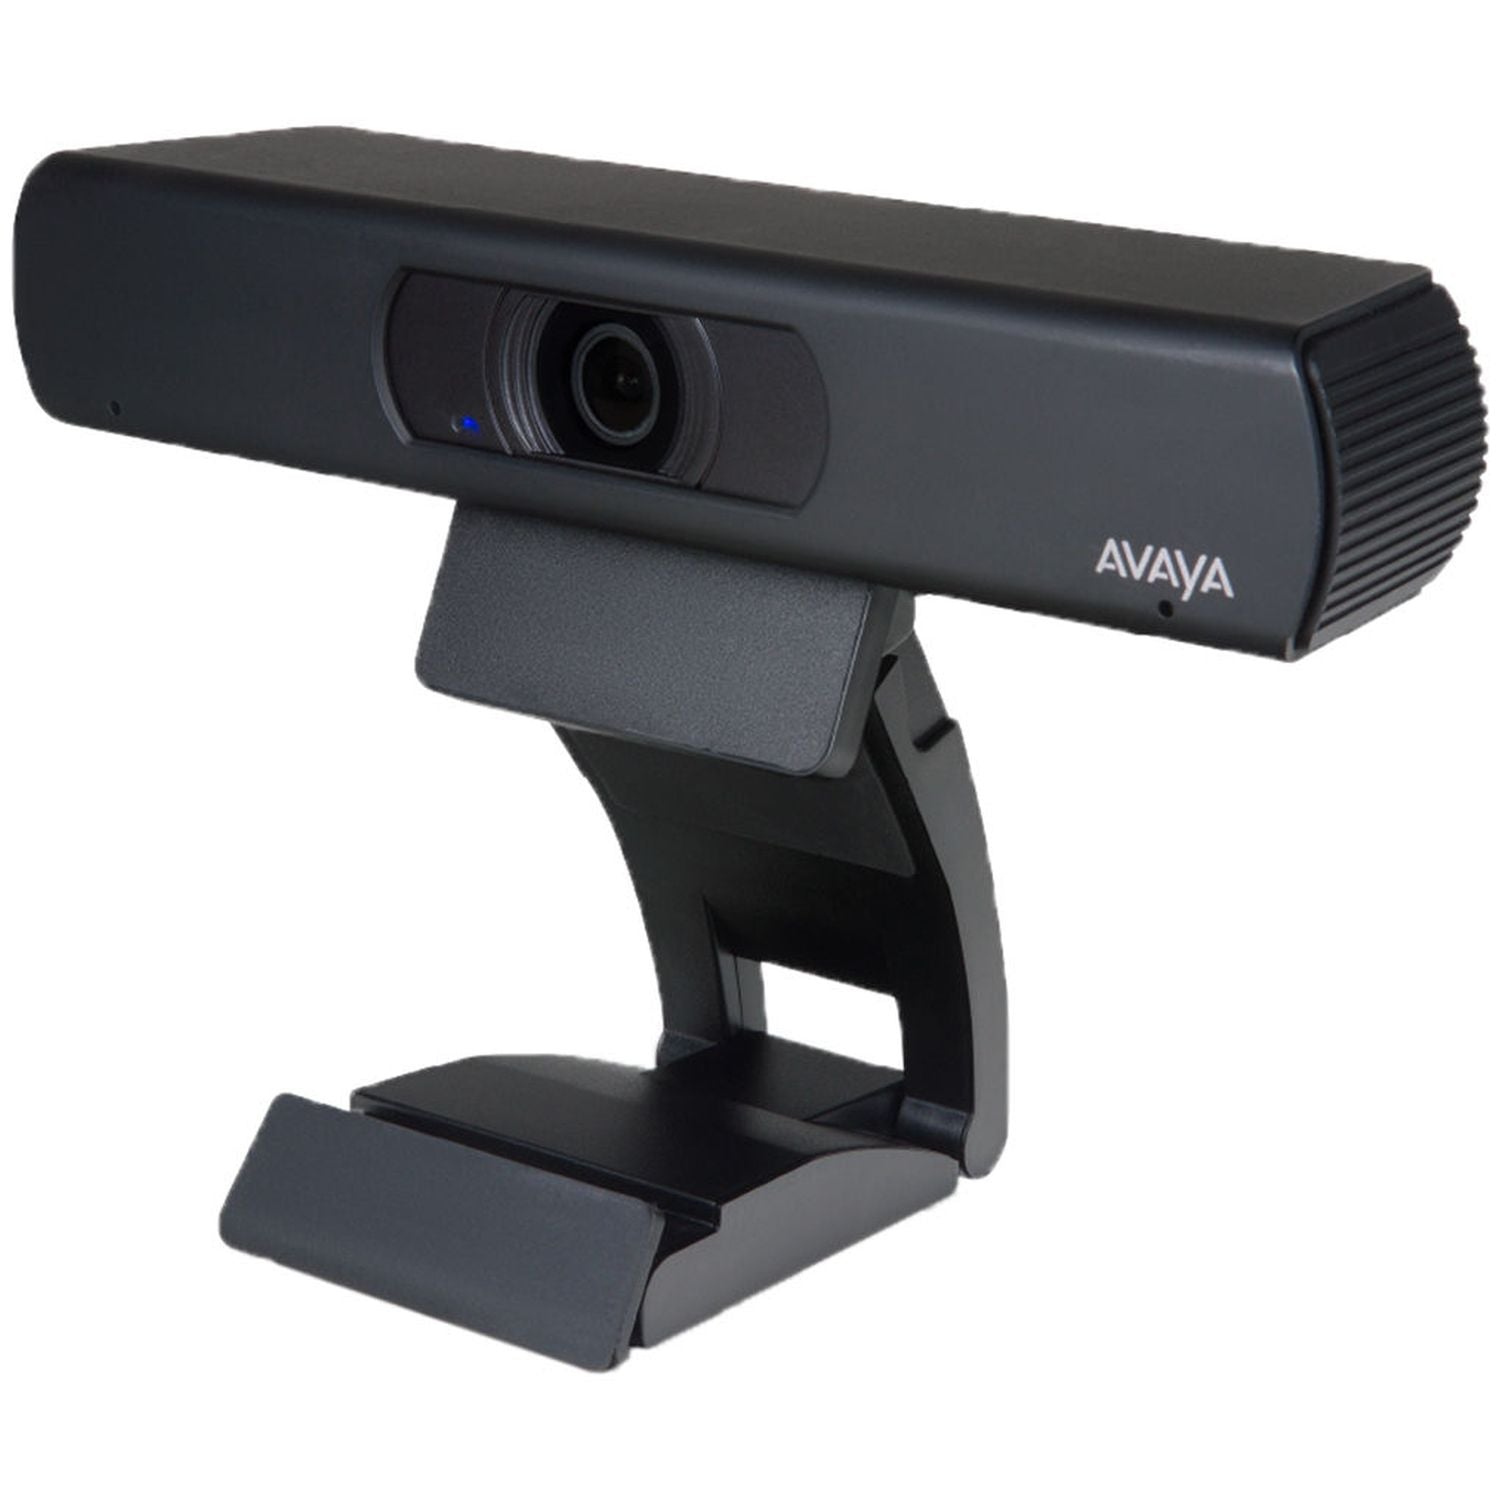 Avaya 700514534 HC020 Video Conferencing Camera 30 fps - USB - 1920 x 1080 Video